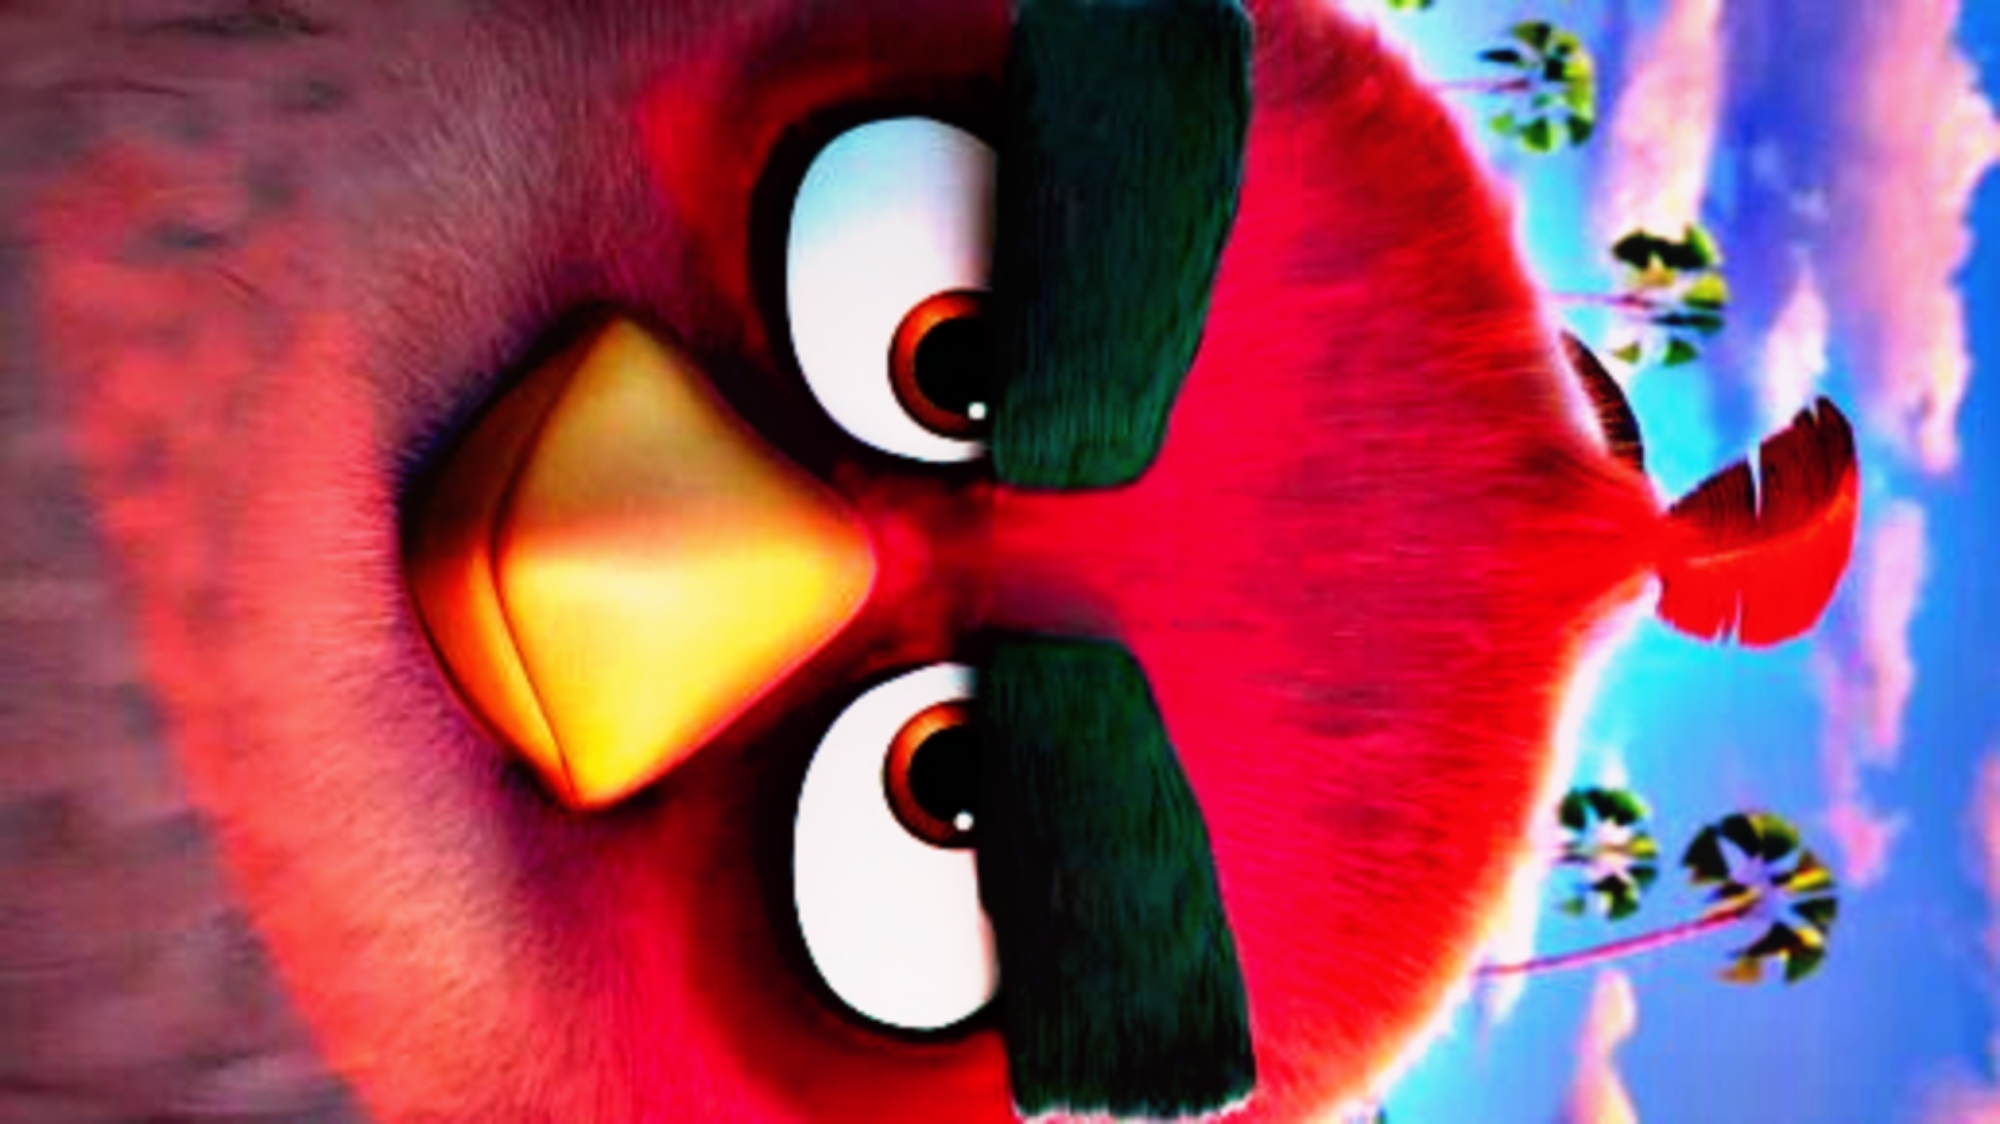 Angry Birds 3 в кино — Тизер-трейлер (2025)